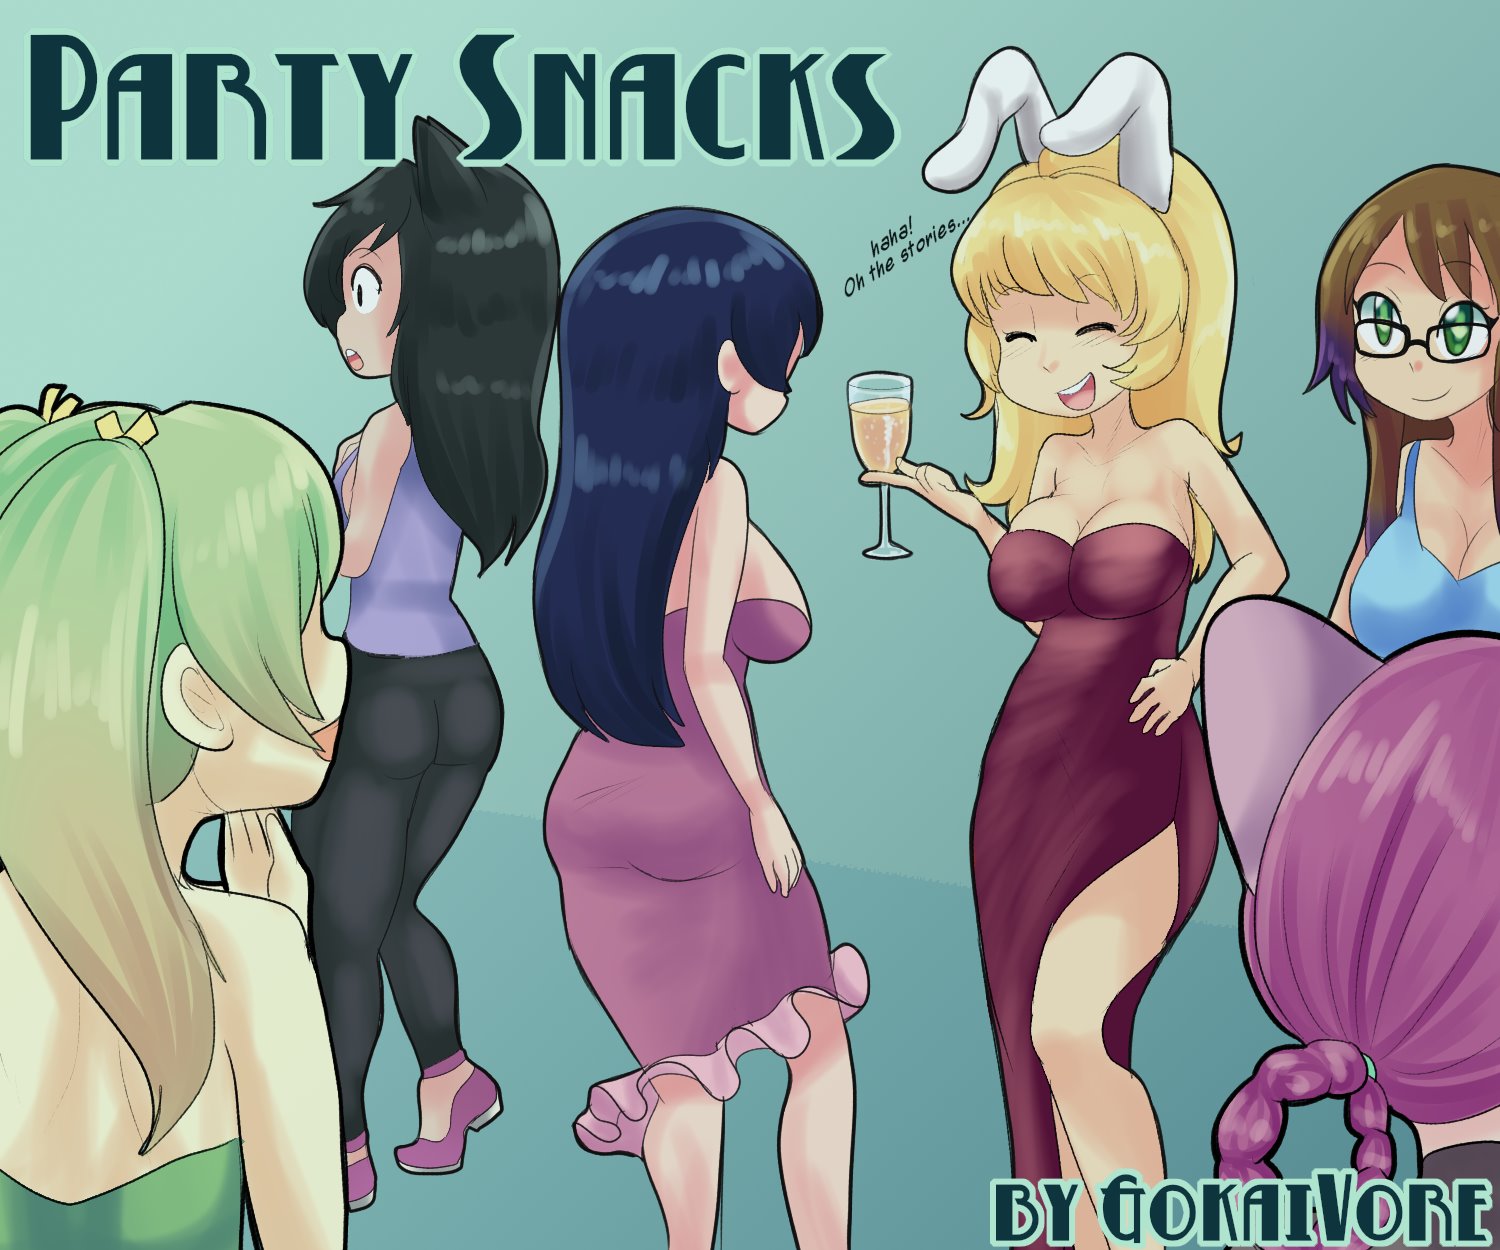 GokaiVore - Party snacks porn comic.